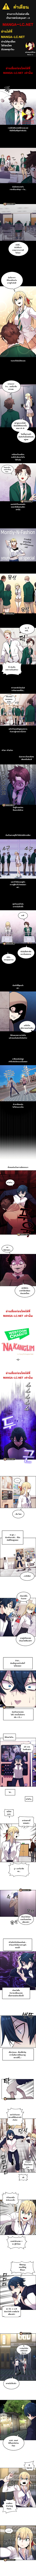 Webtoon Character Na Kang Lim ร ยธโ€ขร ยธยญร ยธโขร ยธโ€”ร ยธยตร ยนห 6 (1)